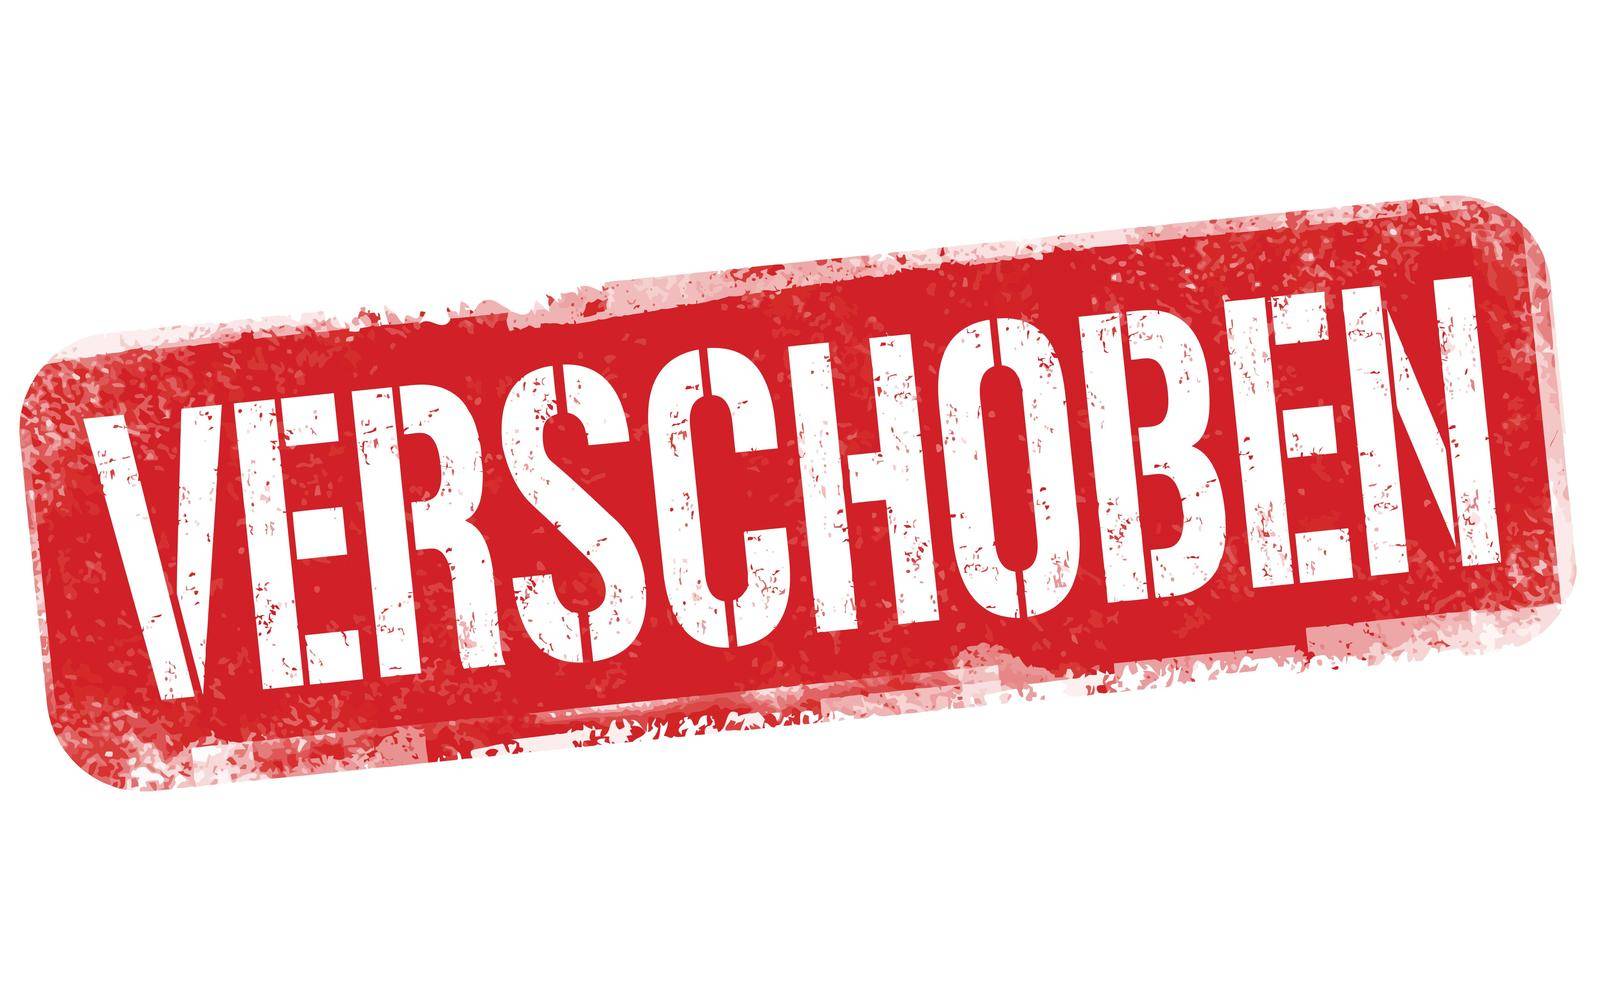 Postponed on german language ( Verschoben )grunge rubber stamp on white background, vector illustration